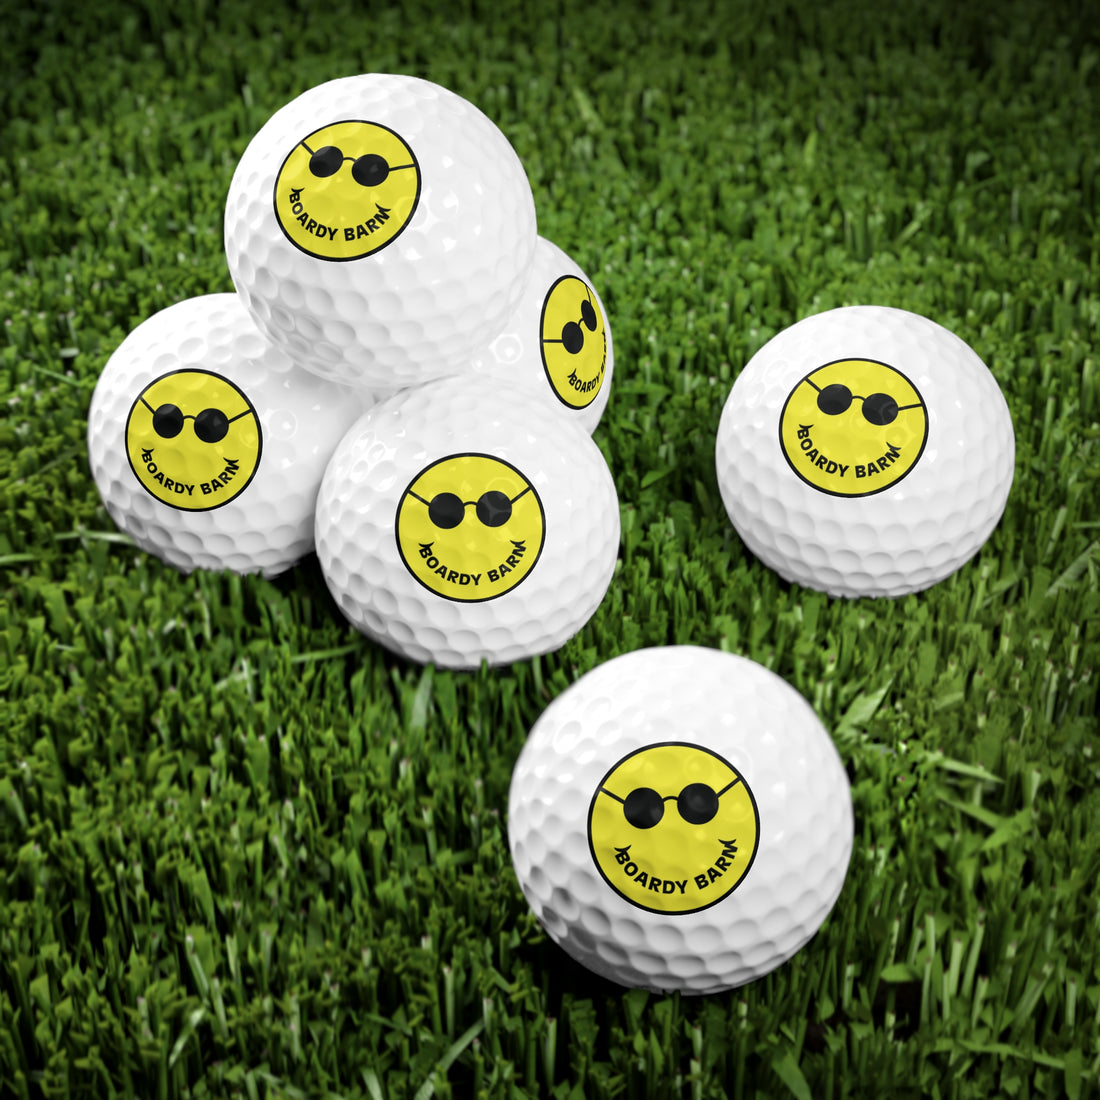 
  
  Boardy Barn Smiley Face Golf Balls, 6pcs
  
